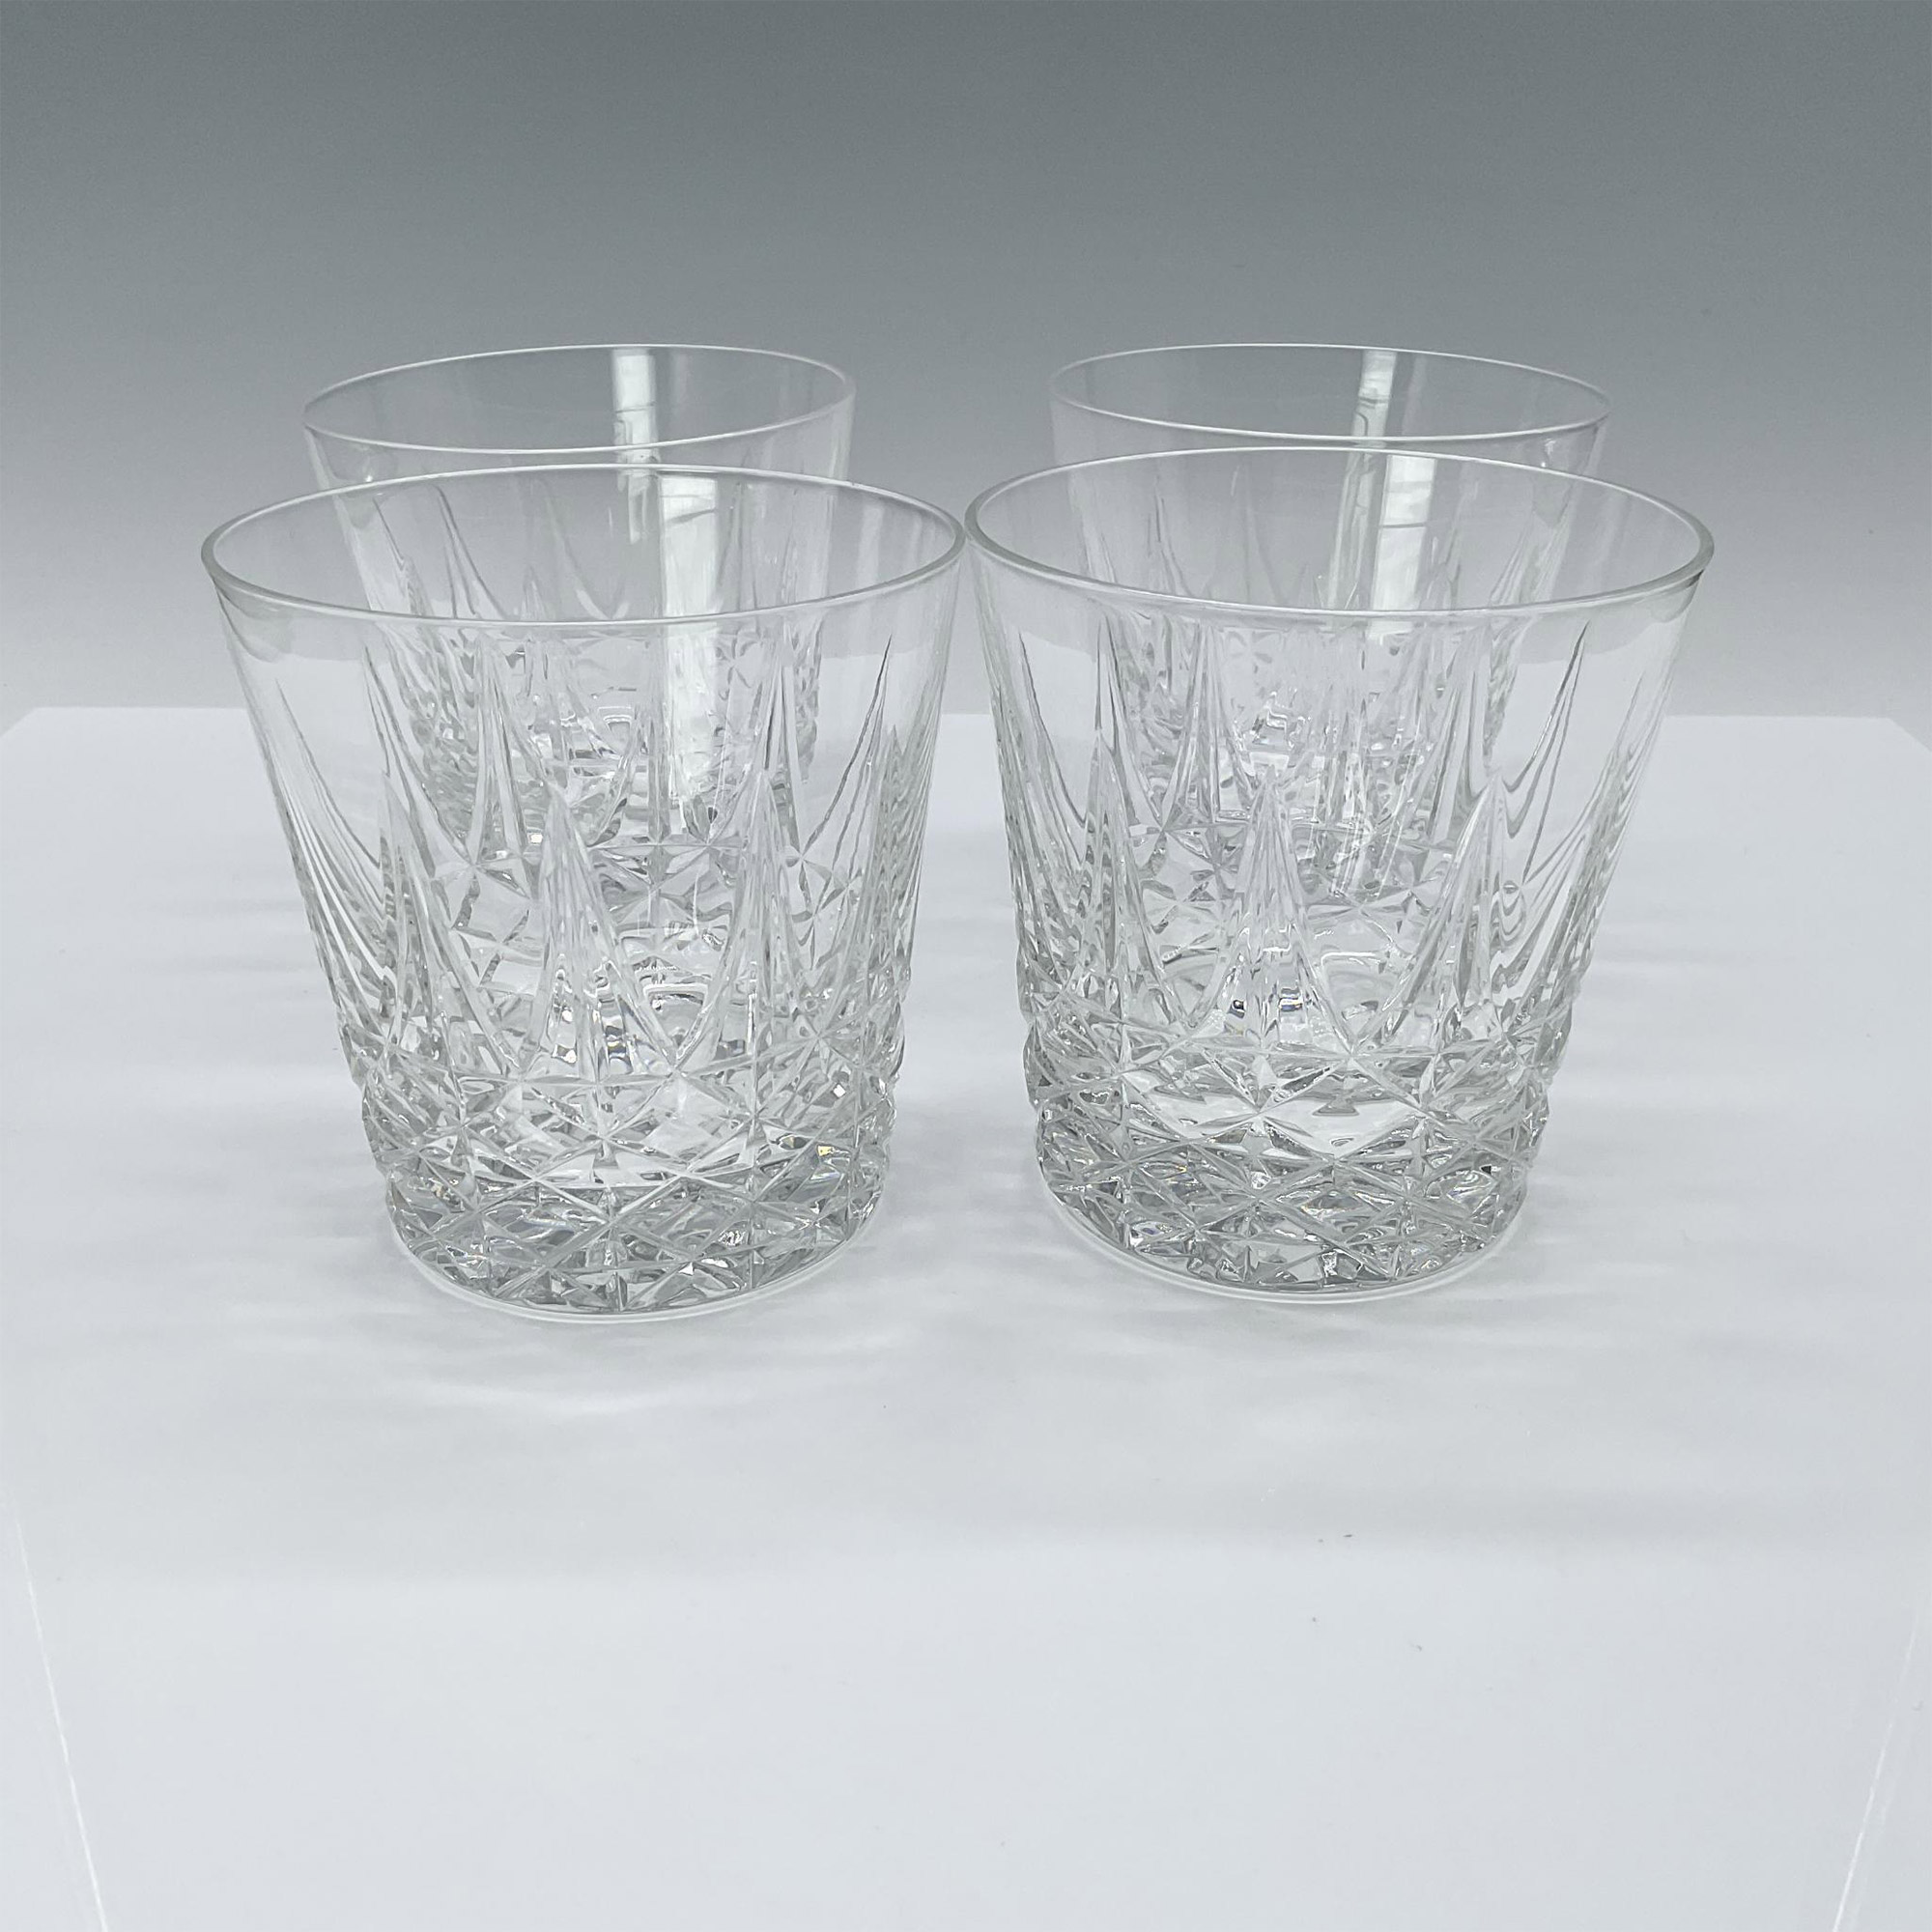 4pc Baccarat Crystal Rocks Glasses - Image 2 of 4